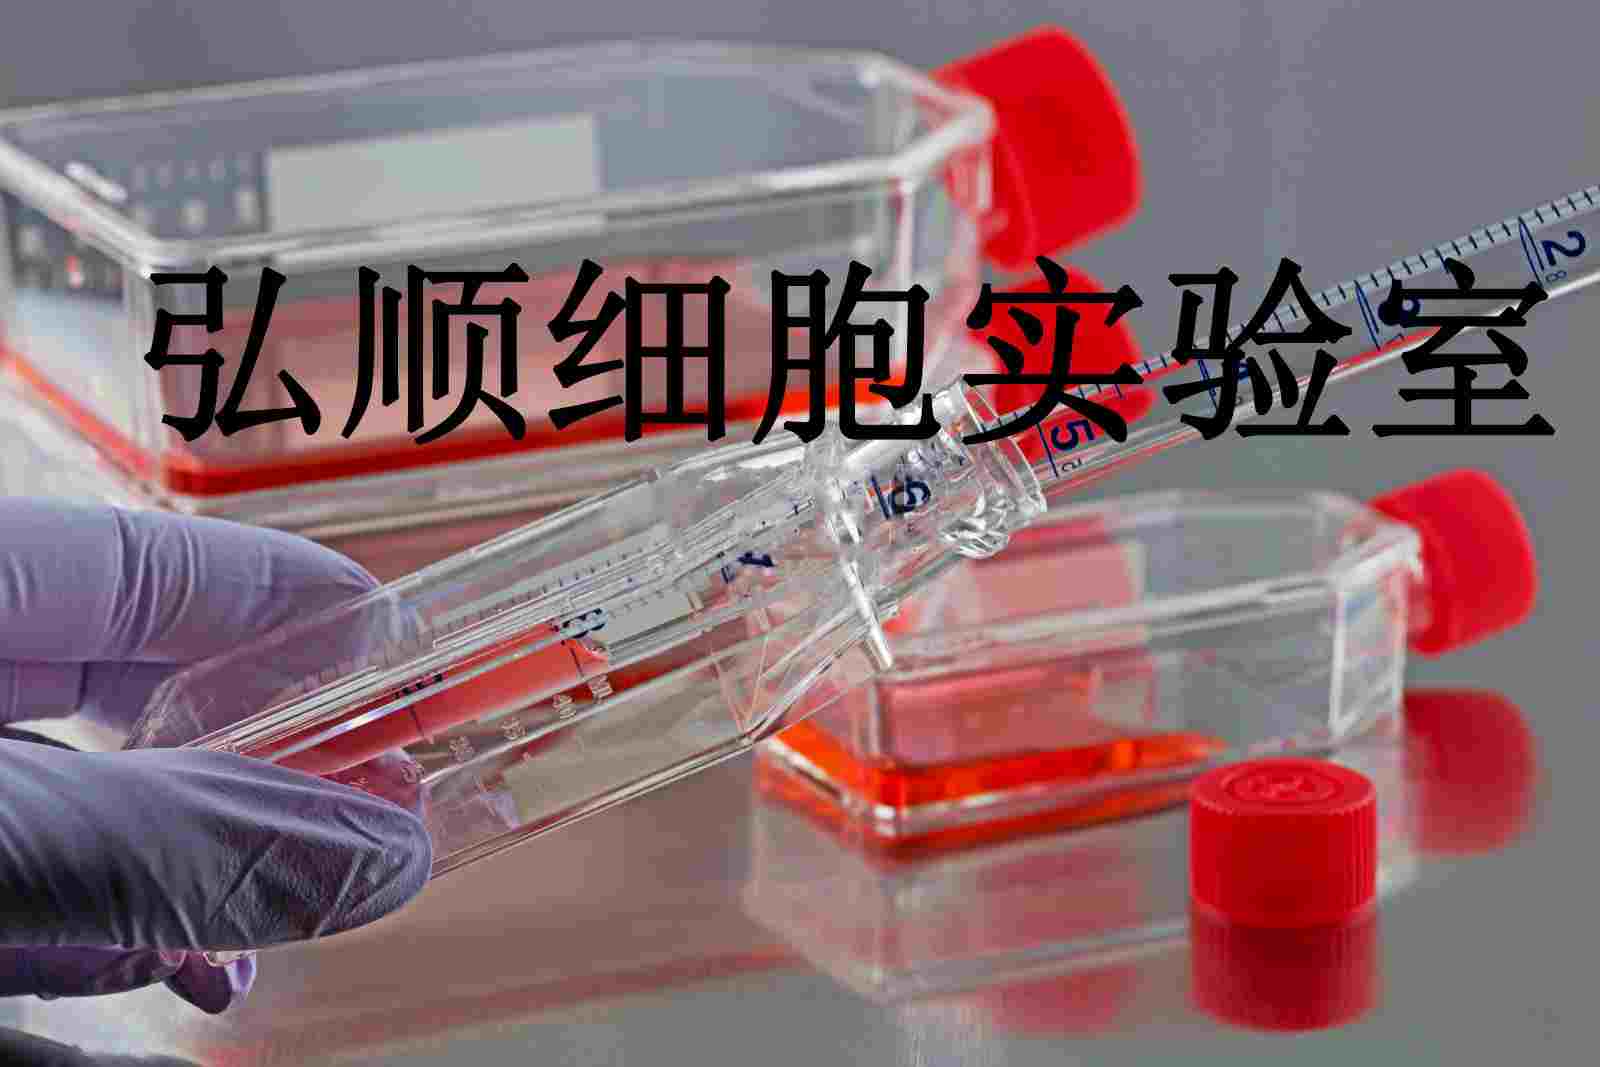 CTLA4 Ig-24中国仓鼠卵巢贴壁细胞系,CTLA4 Ig-24